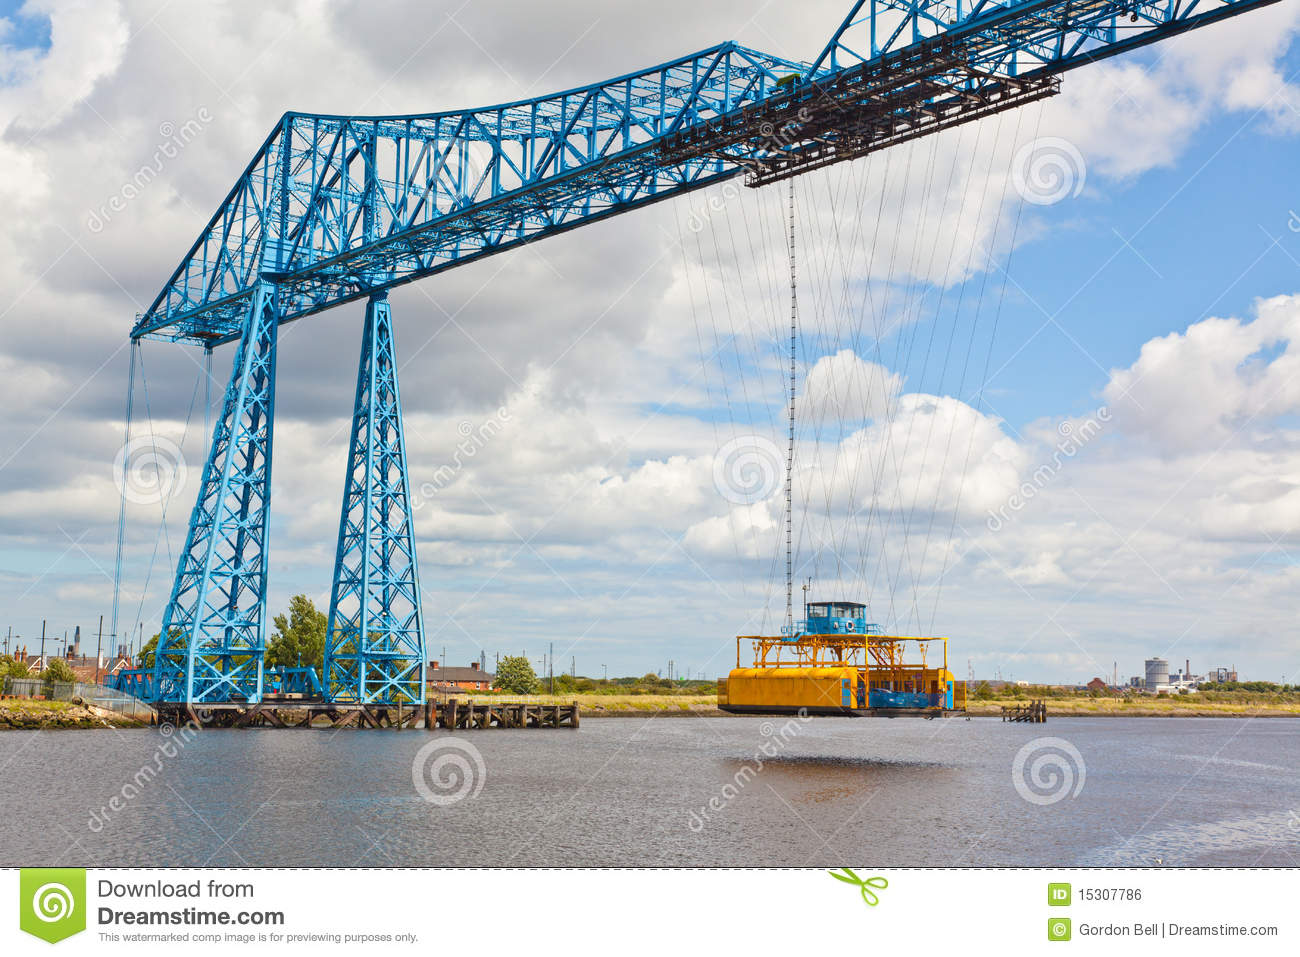 Middlesbrough Transporter Bridge Royalty Free Stock Image   Image    